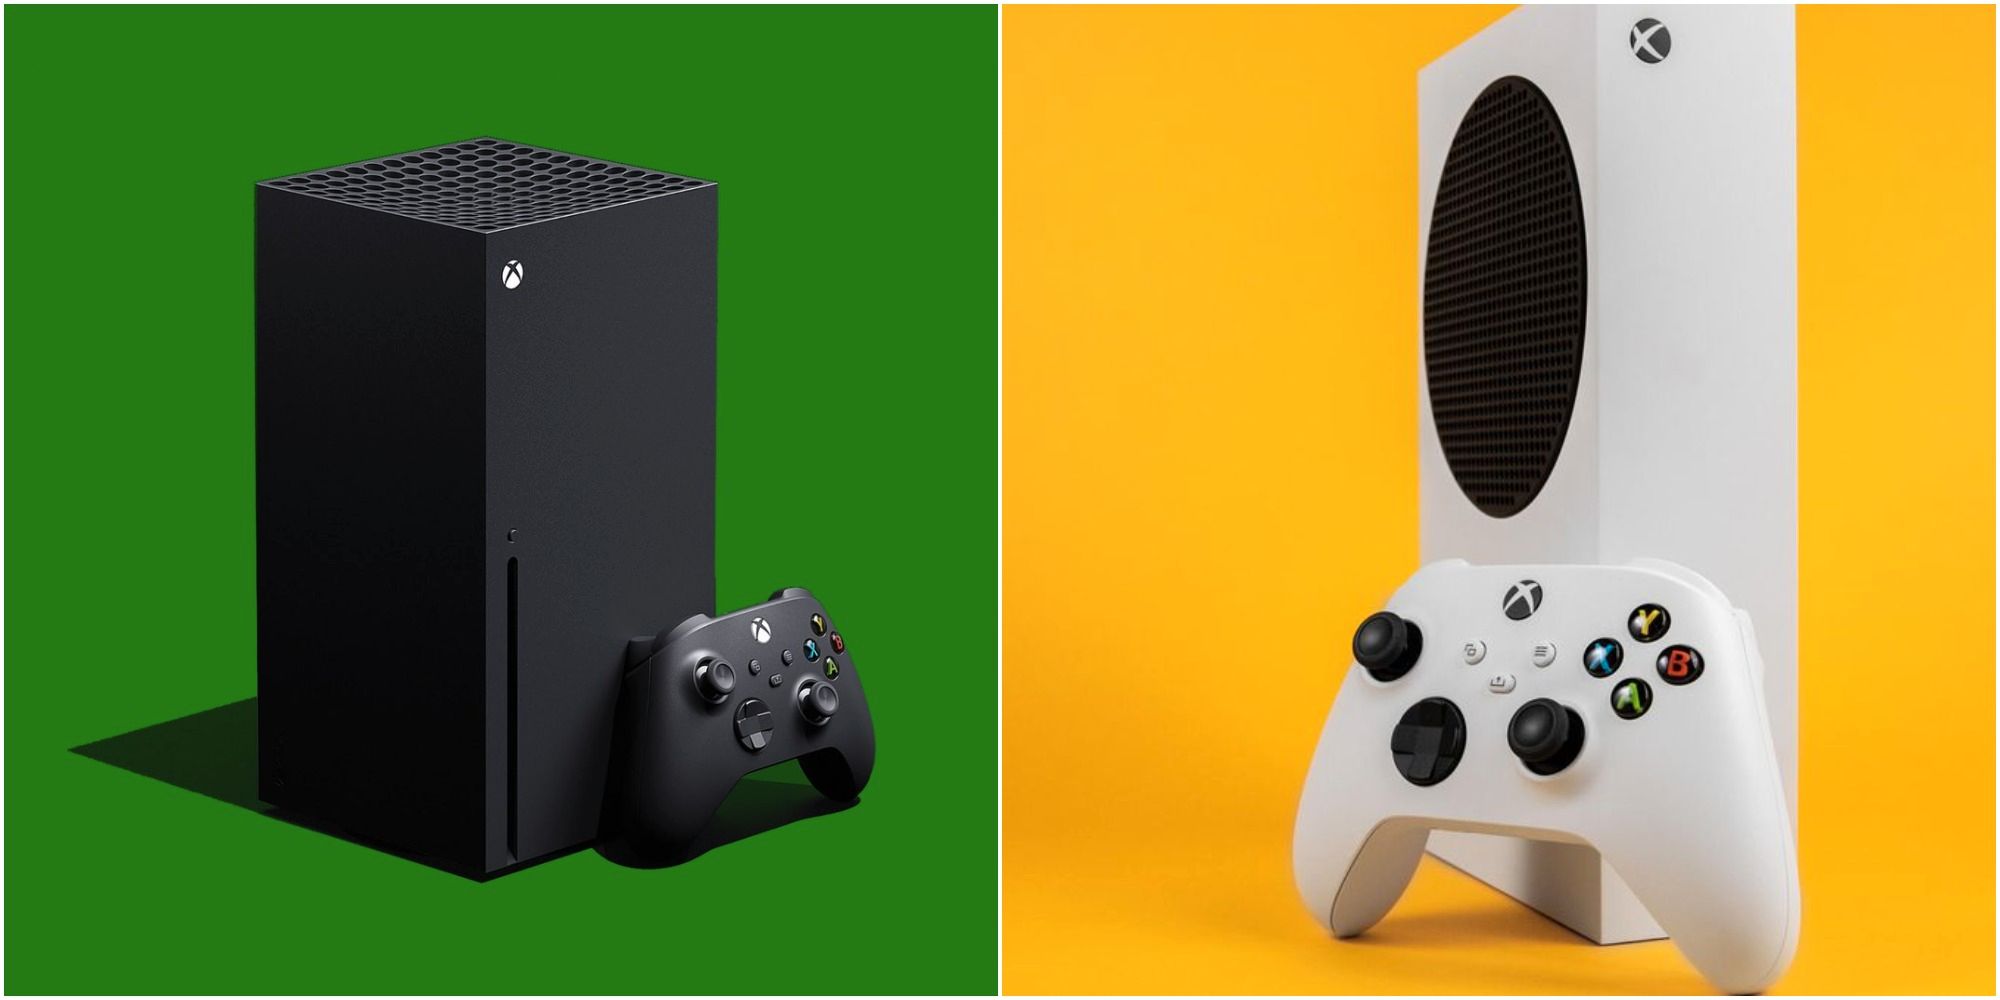 10 Salah Tanggapan Biasa Mengenai Xbox Series X/S